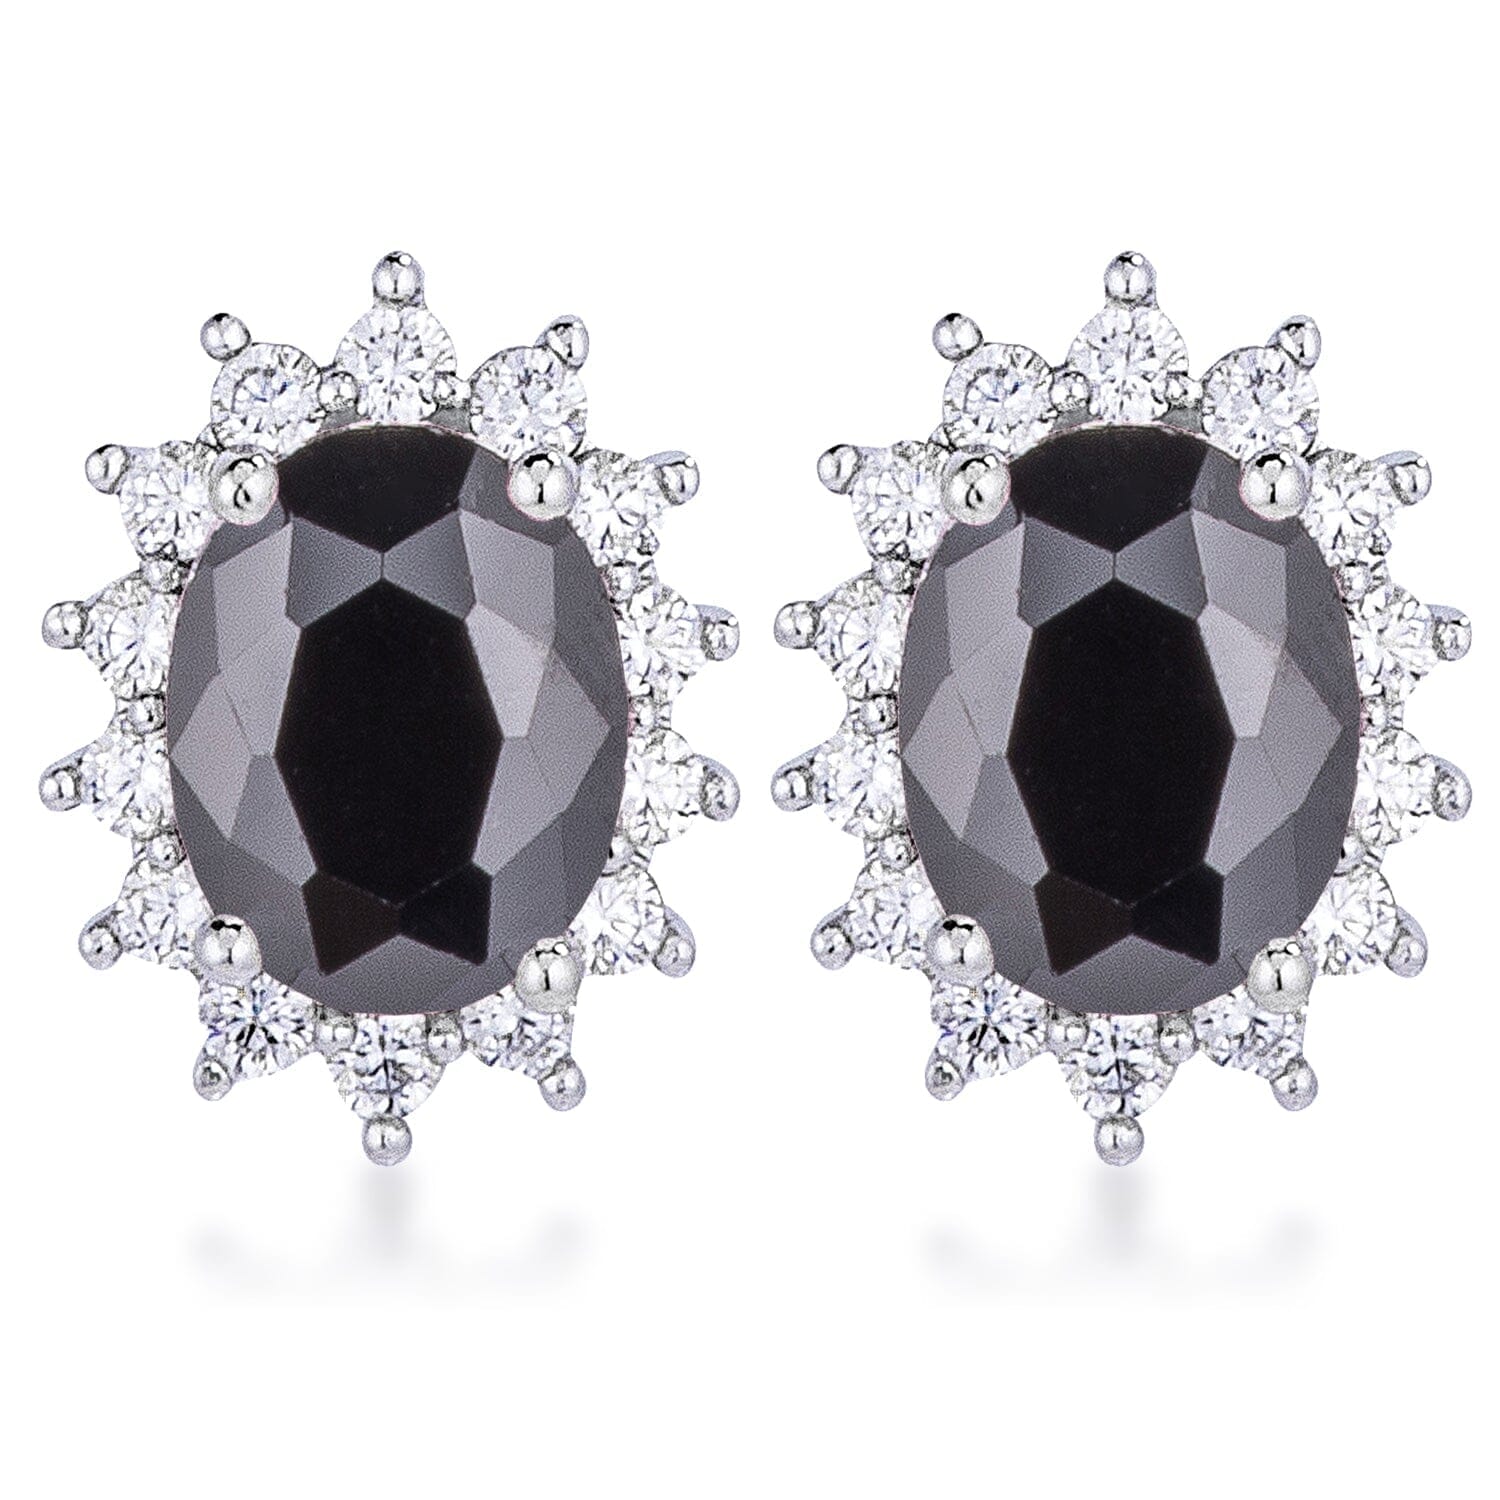 Rhodium Plated Black Petite Royal Oval Earrings Earrings Das Juwel 